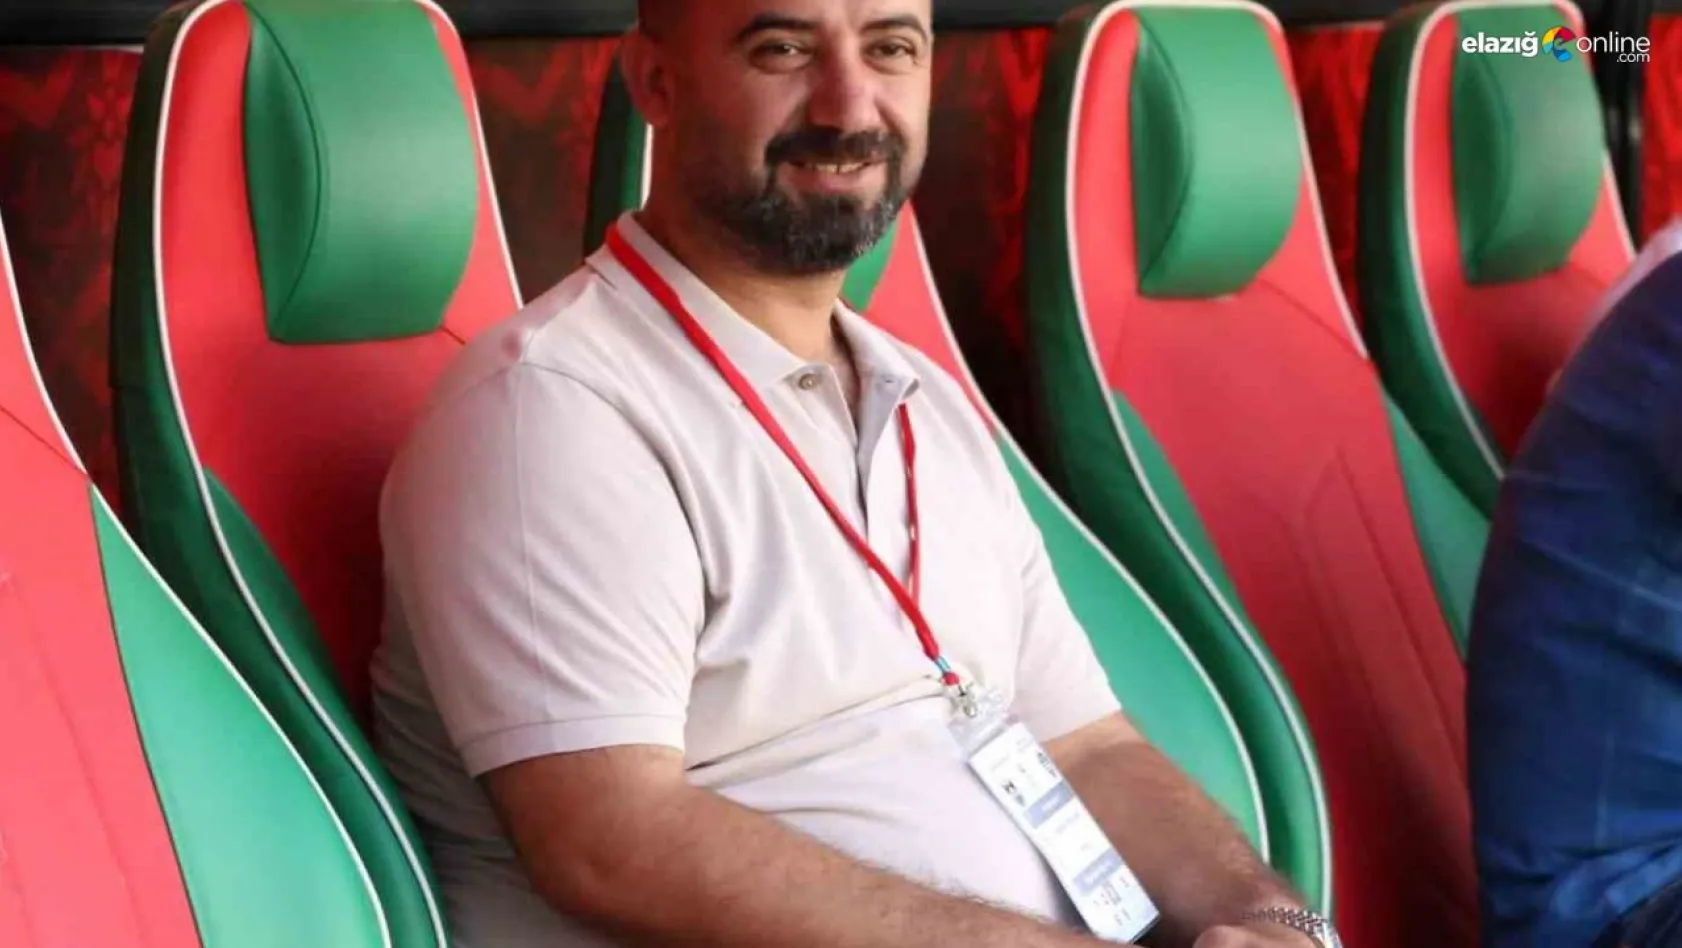 Diyarbekirspor'a iş adamı Kayık'tan prim desteği